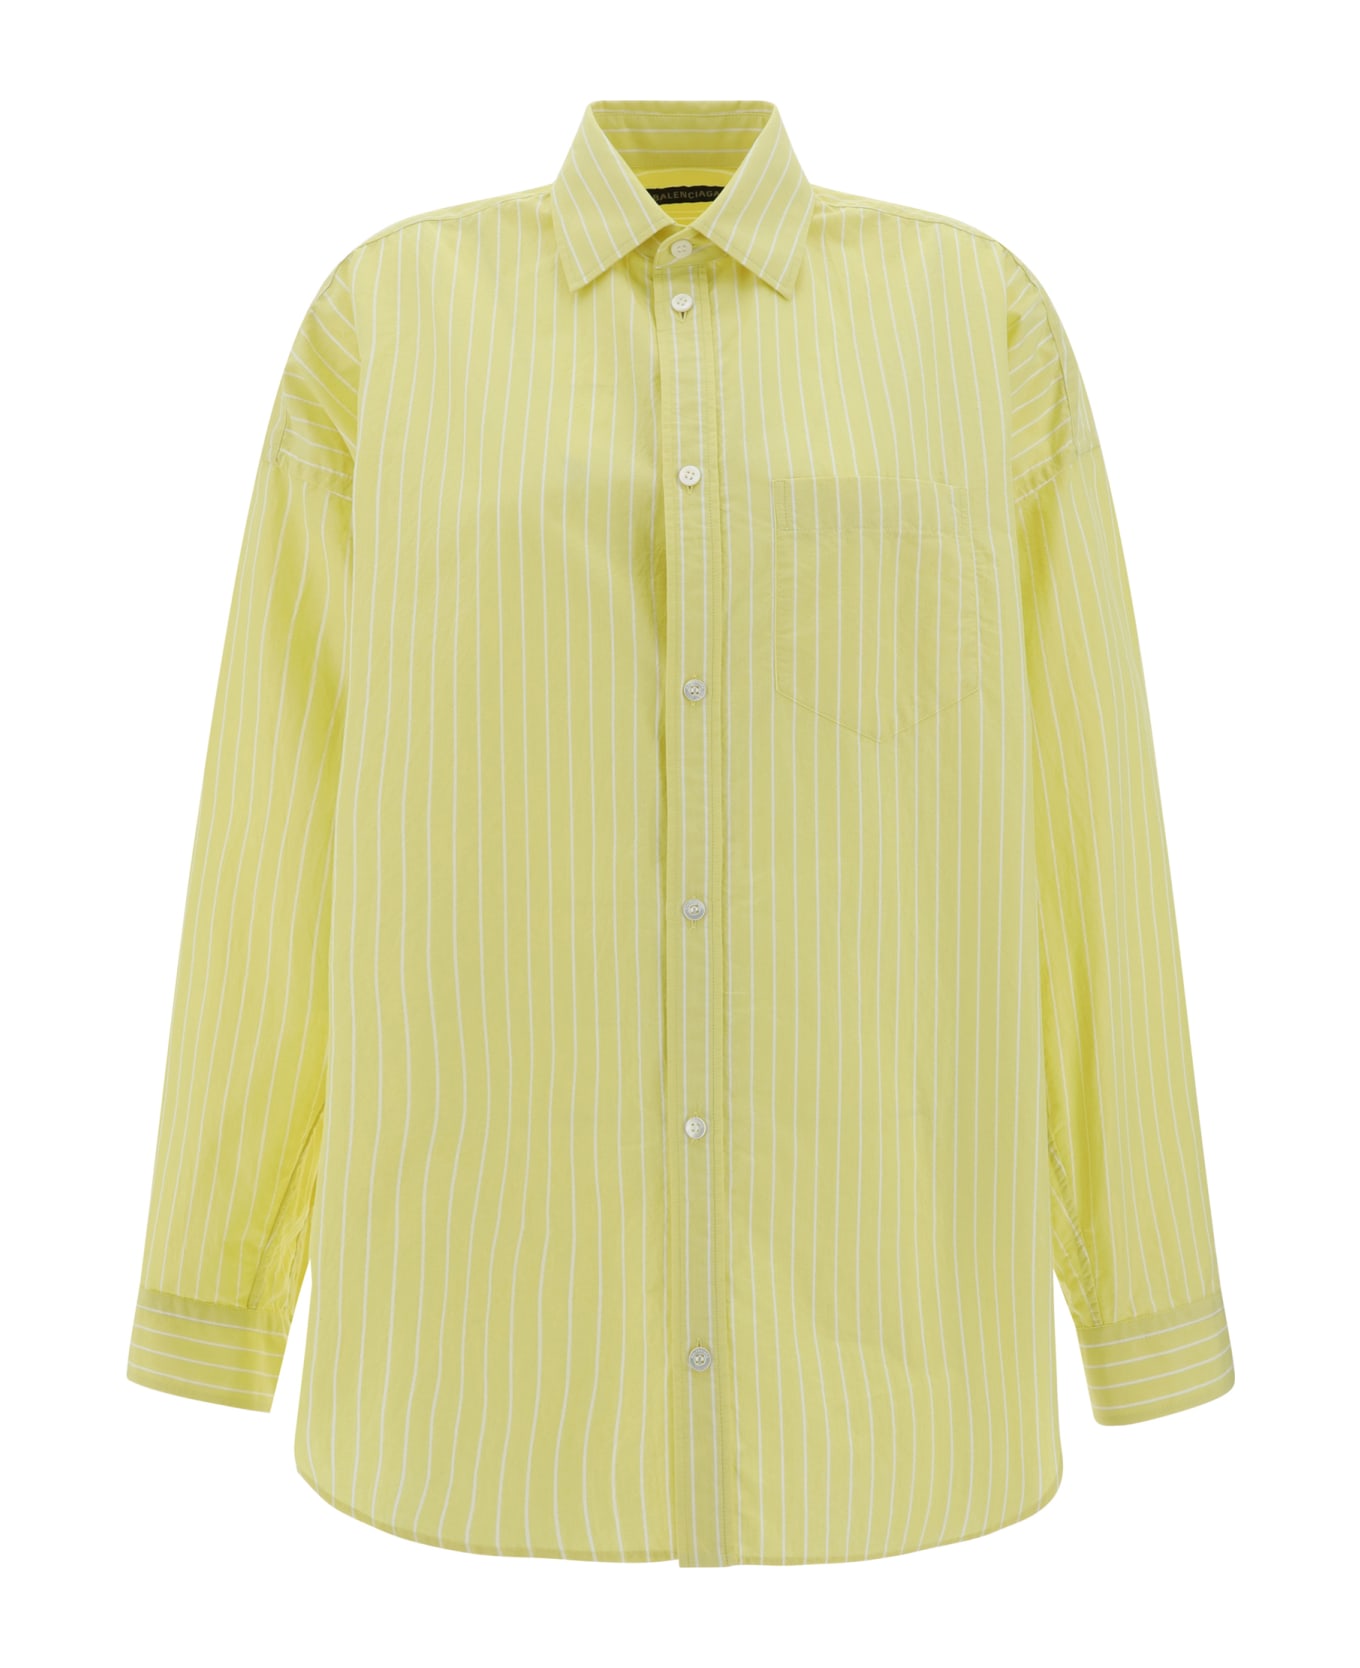 Balenciaga Cocoon Shirt - Light Yellow/white